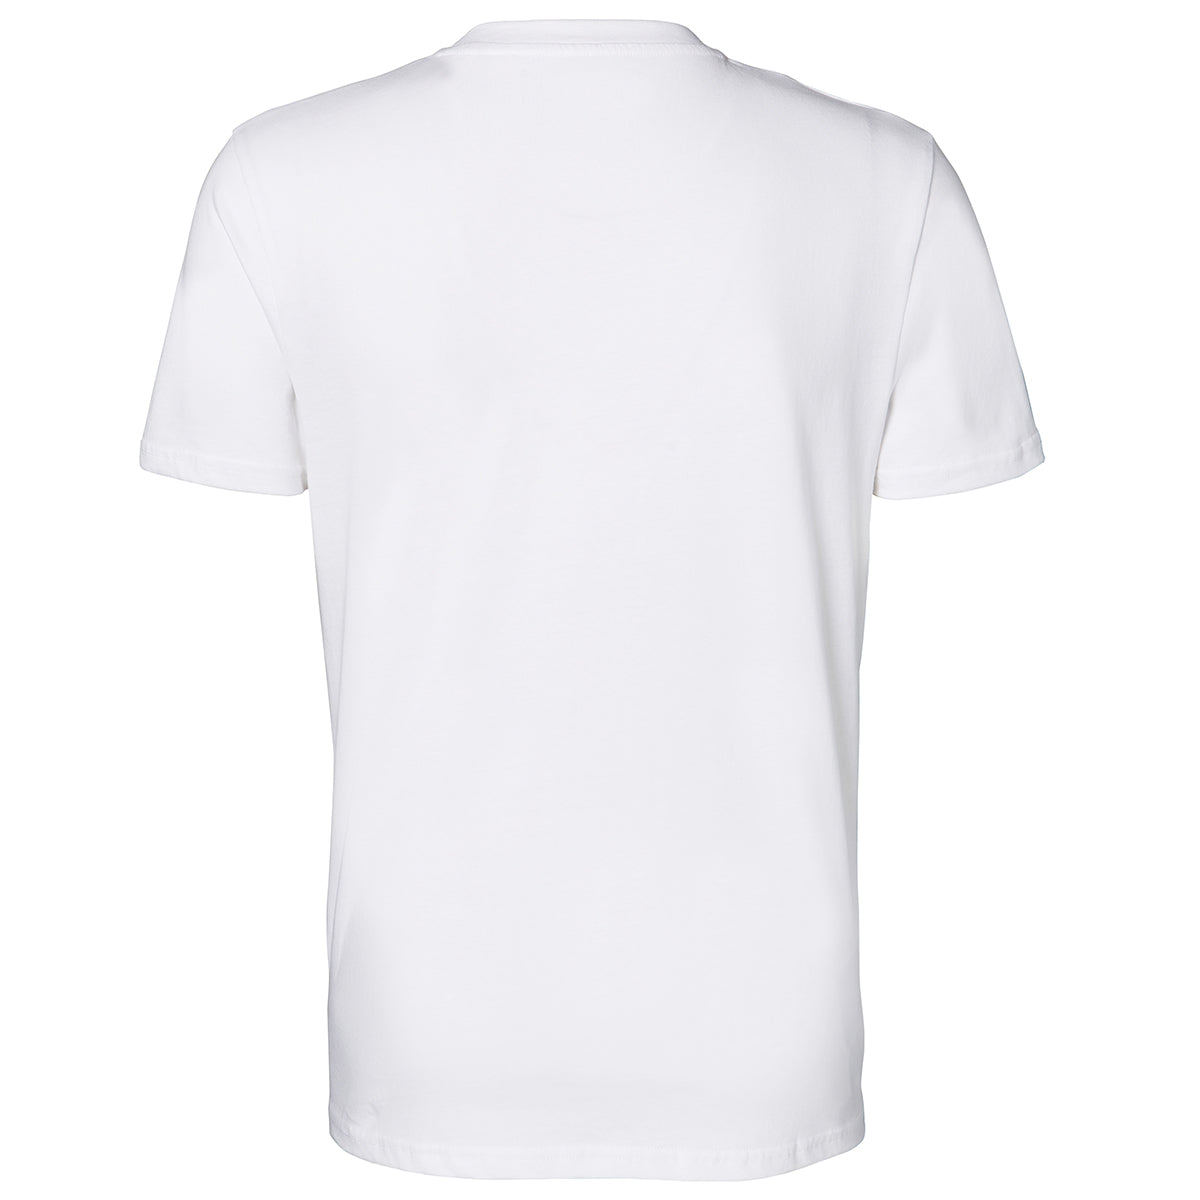 T-shirt Carmes Blanc homme - image 2